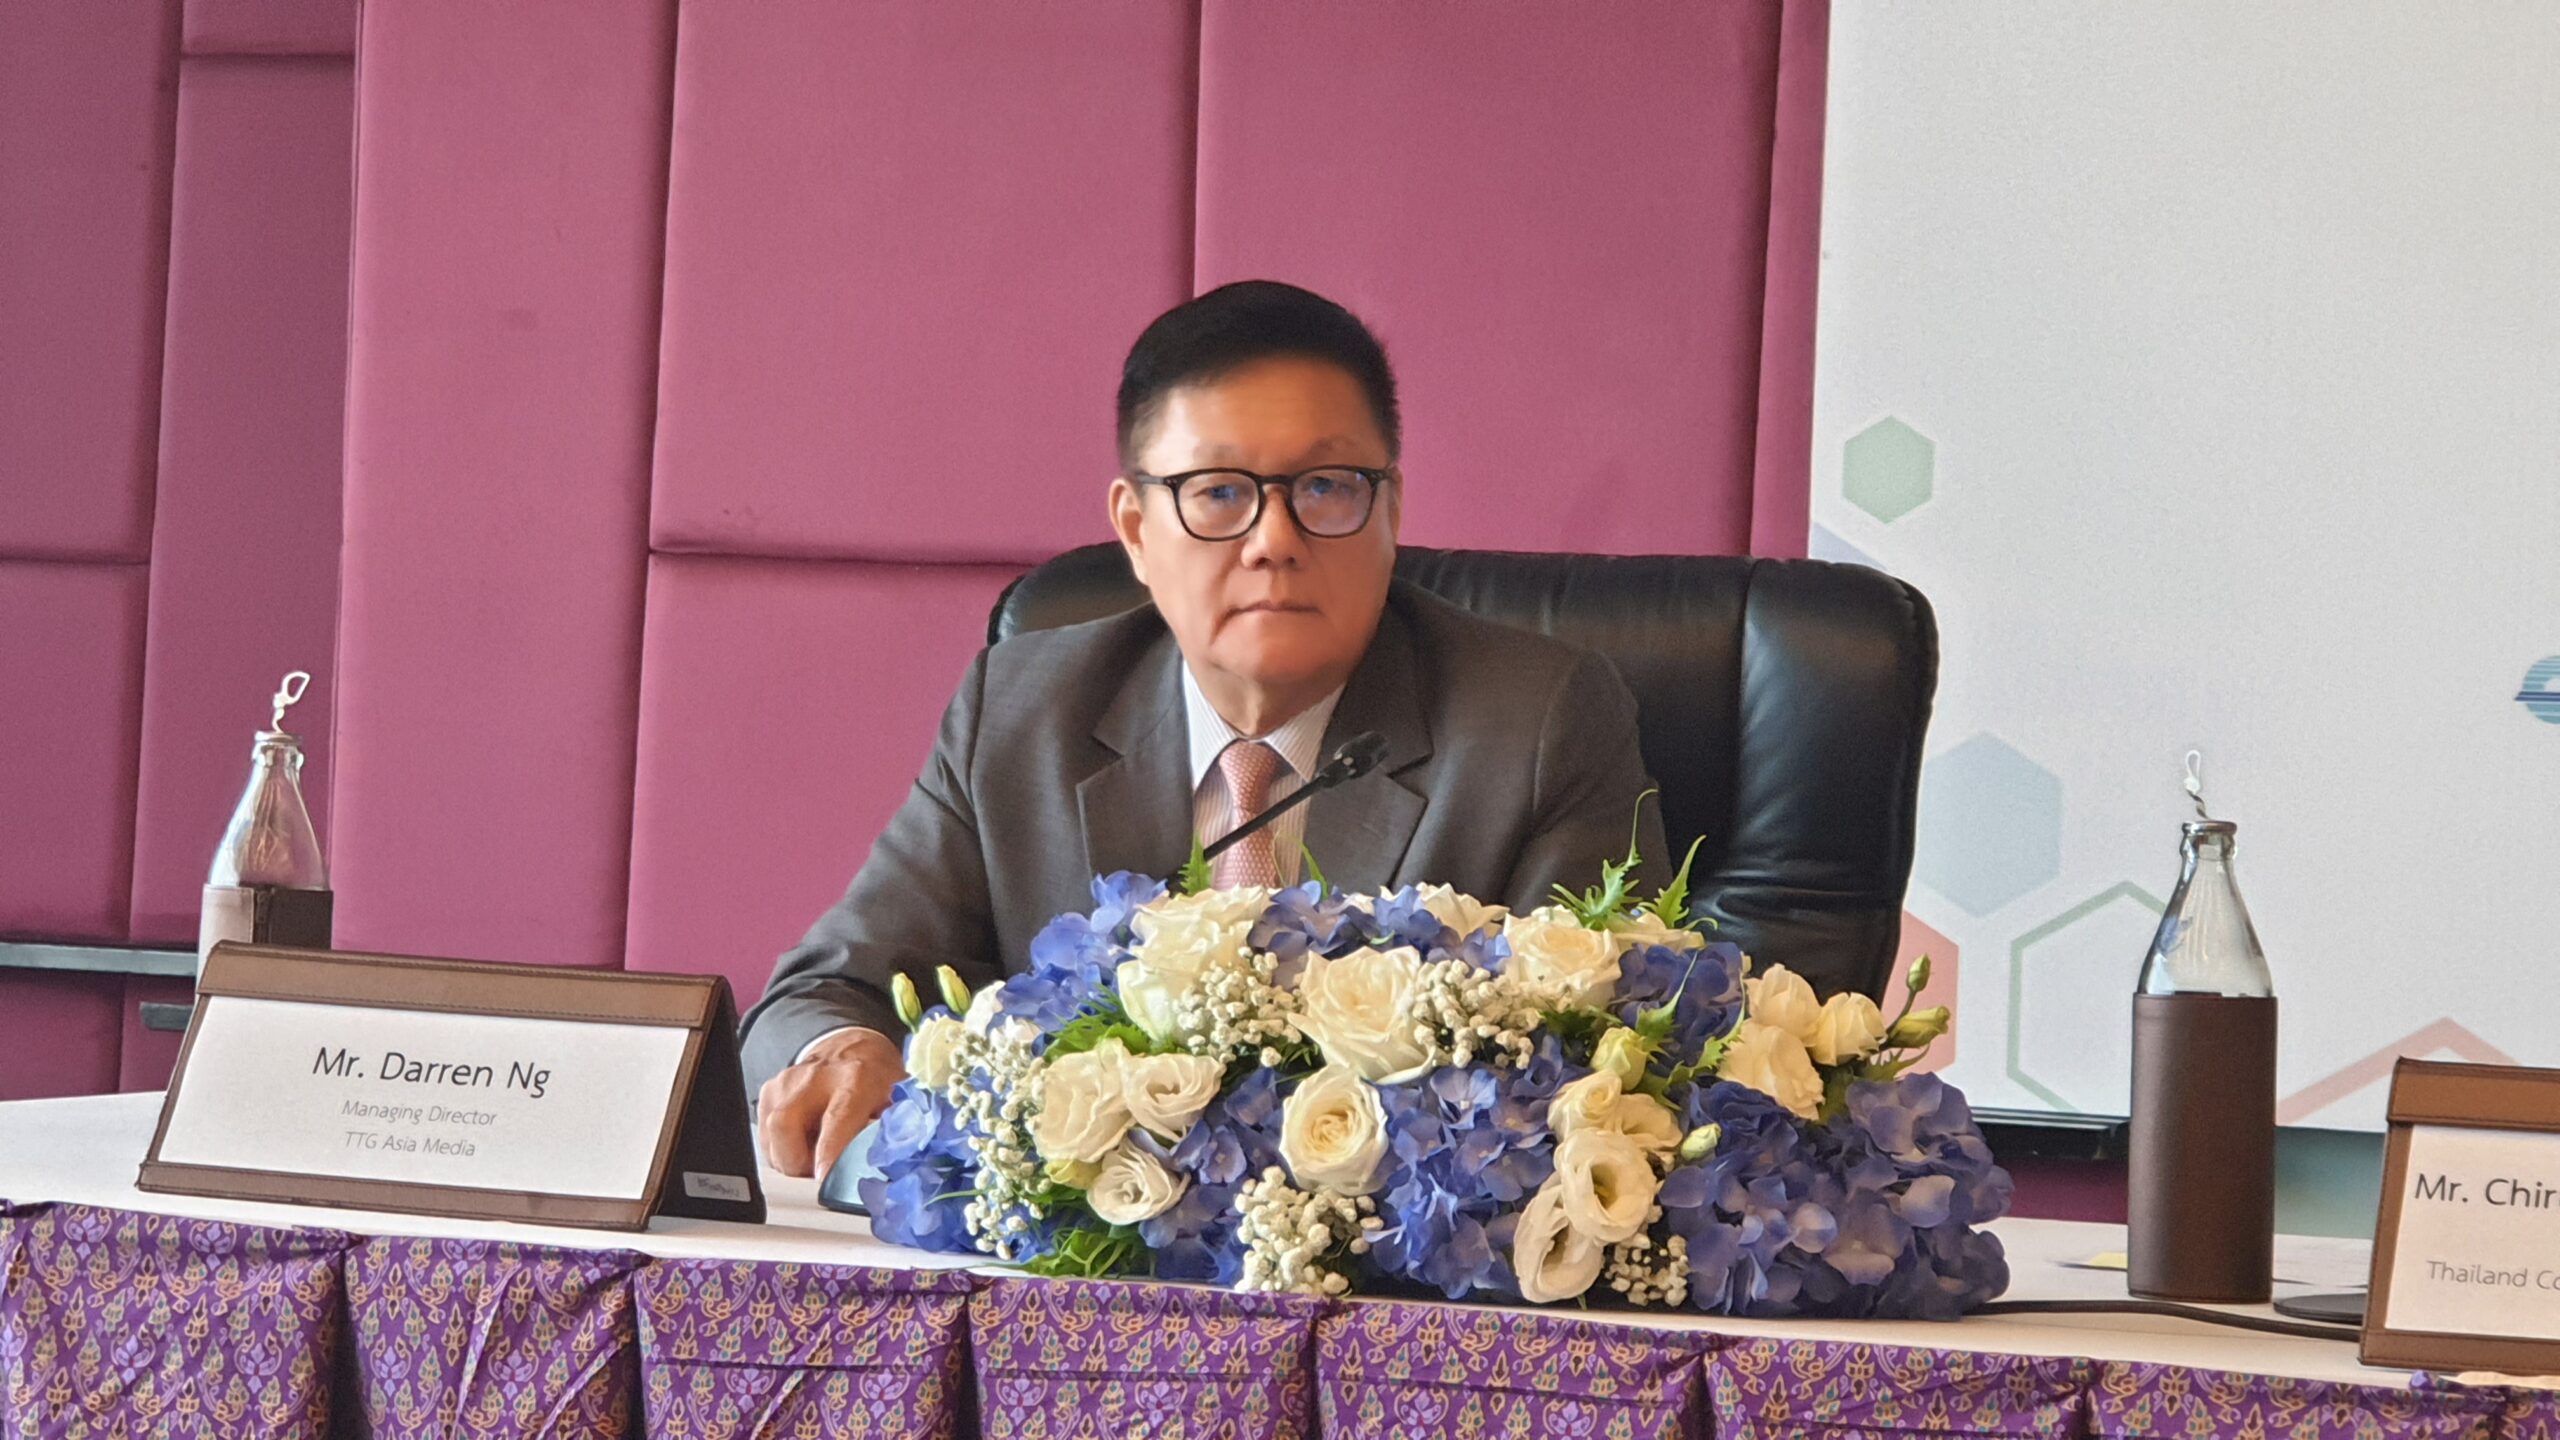 Darren Ng, Managing Director of TTG Asia Media